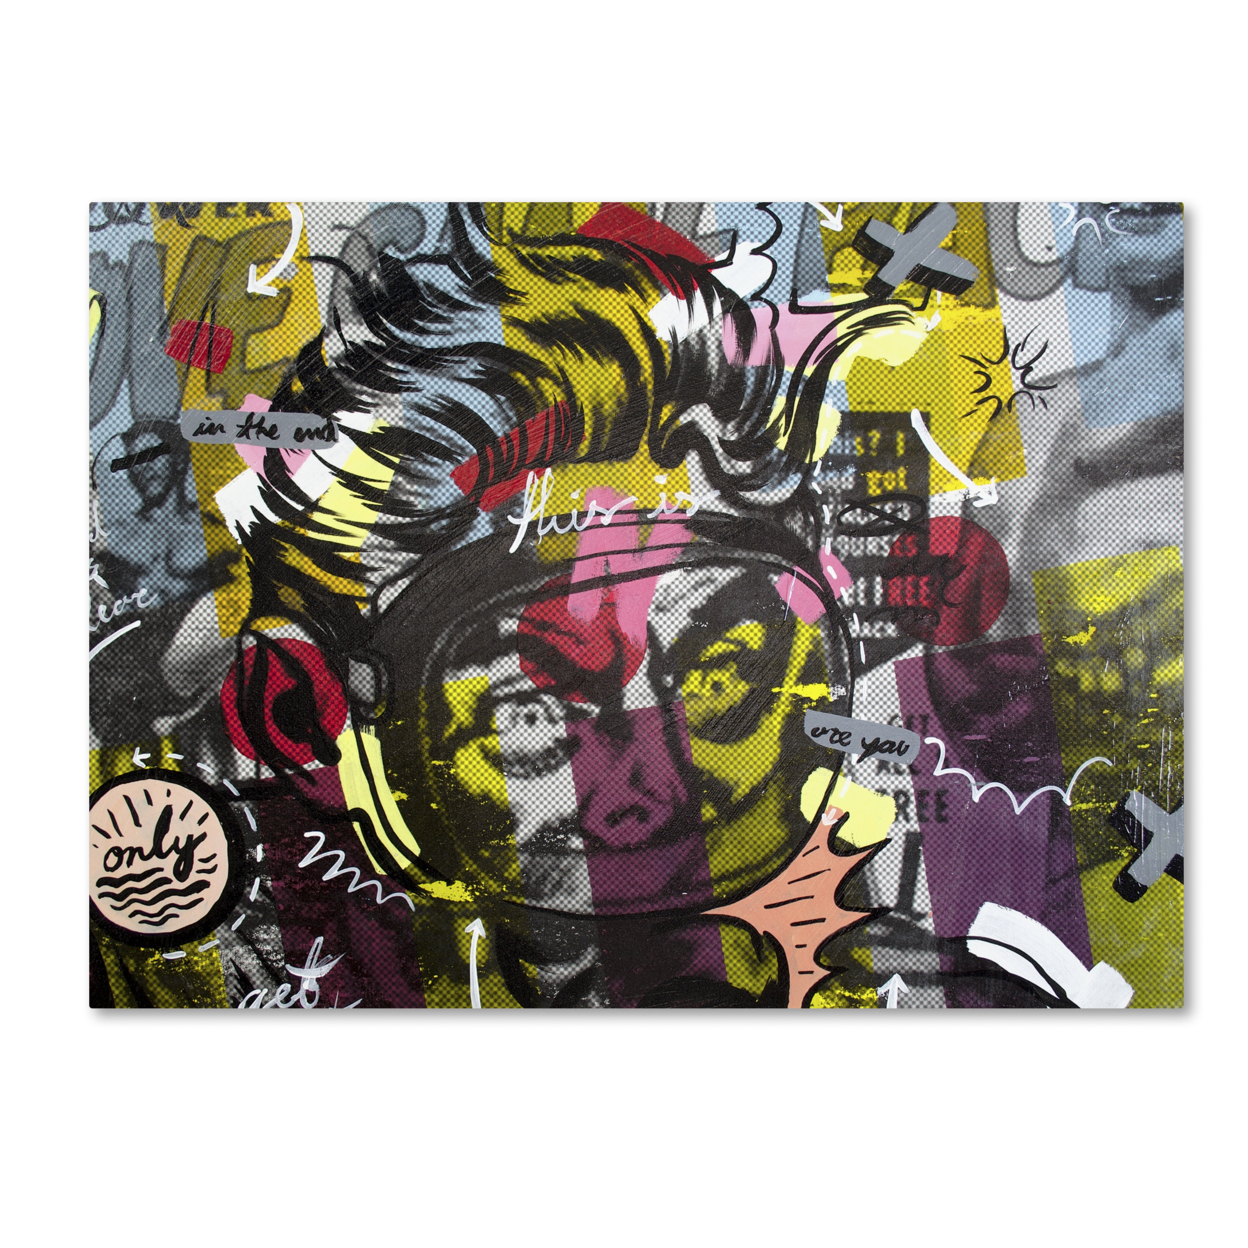 Dan Monteavaro 'Only Love' Canvas Wall Art 35 X 47 Inches